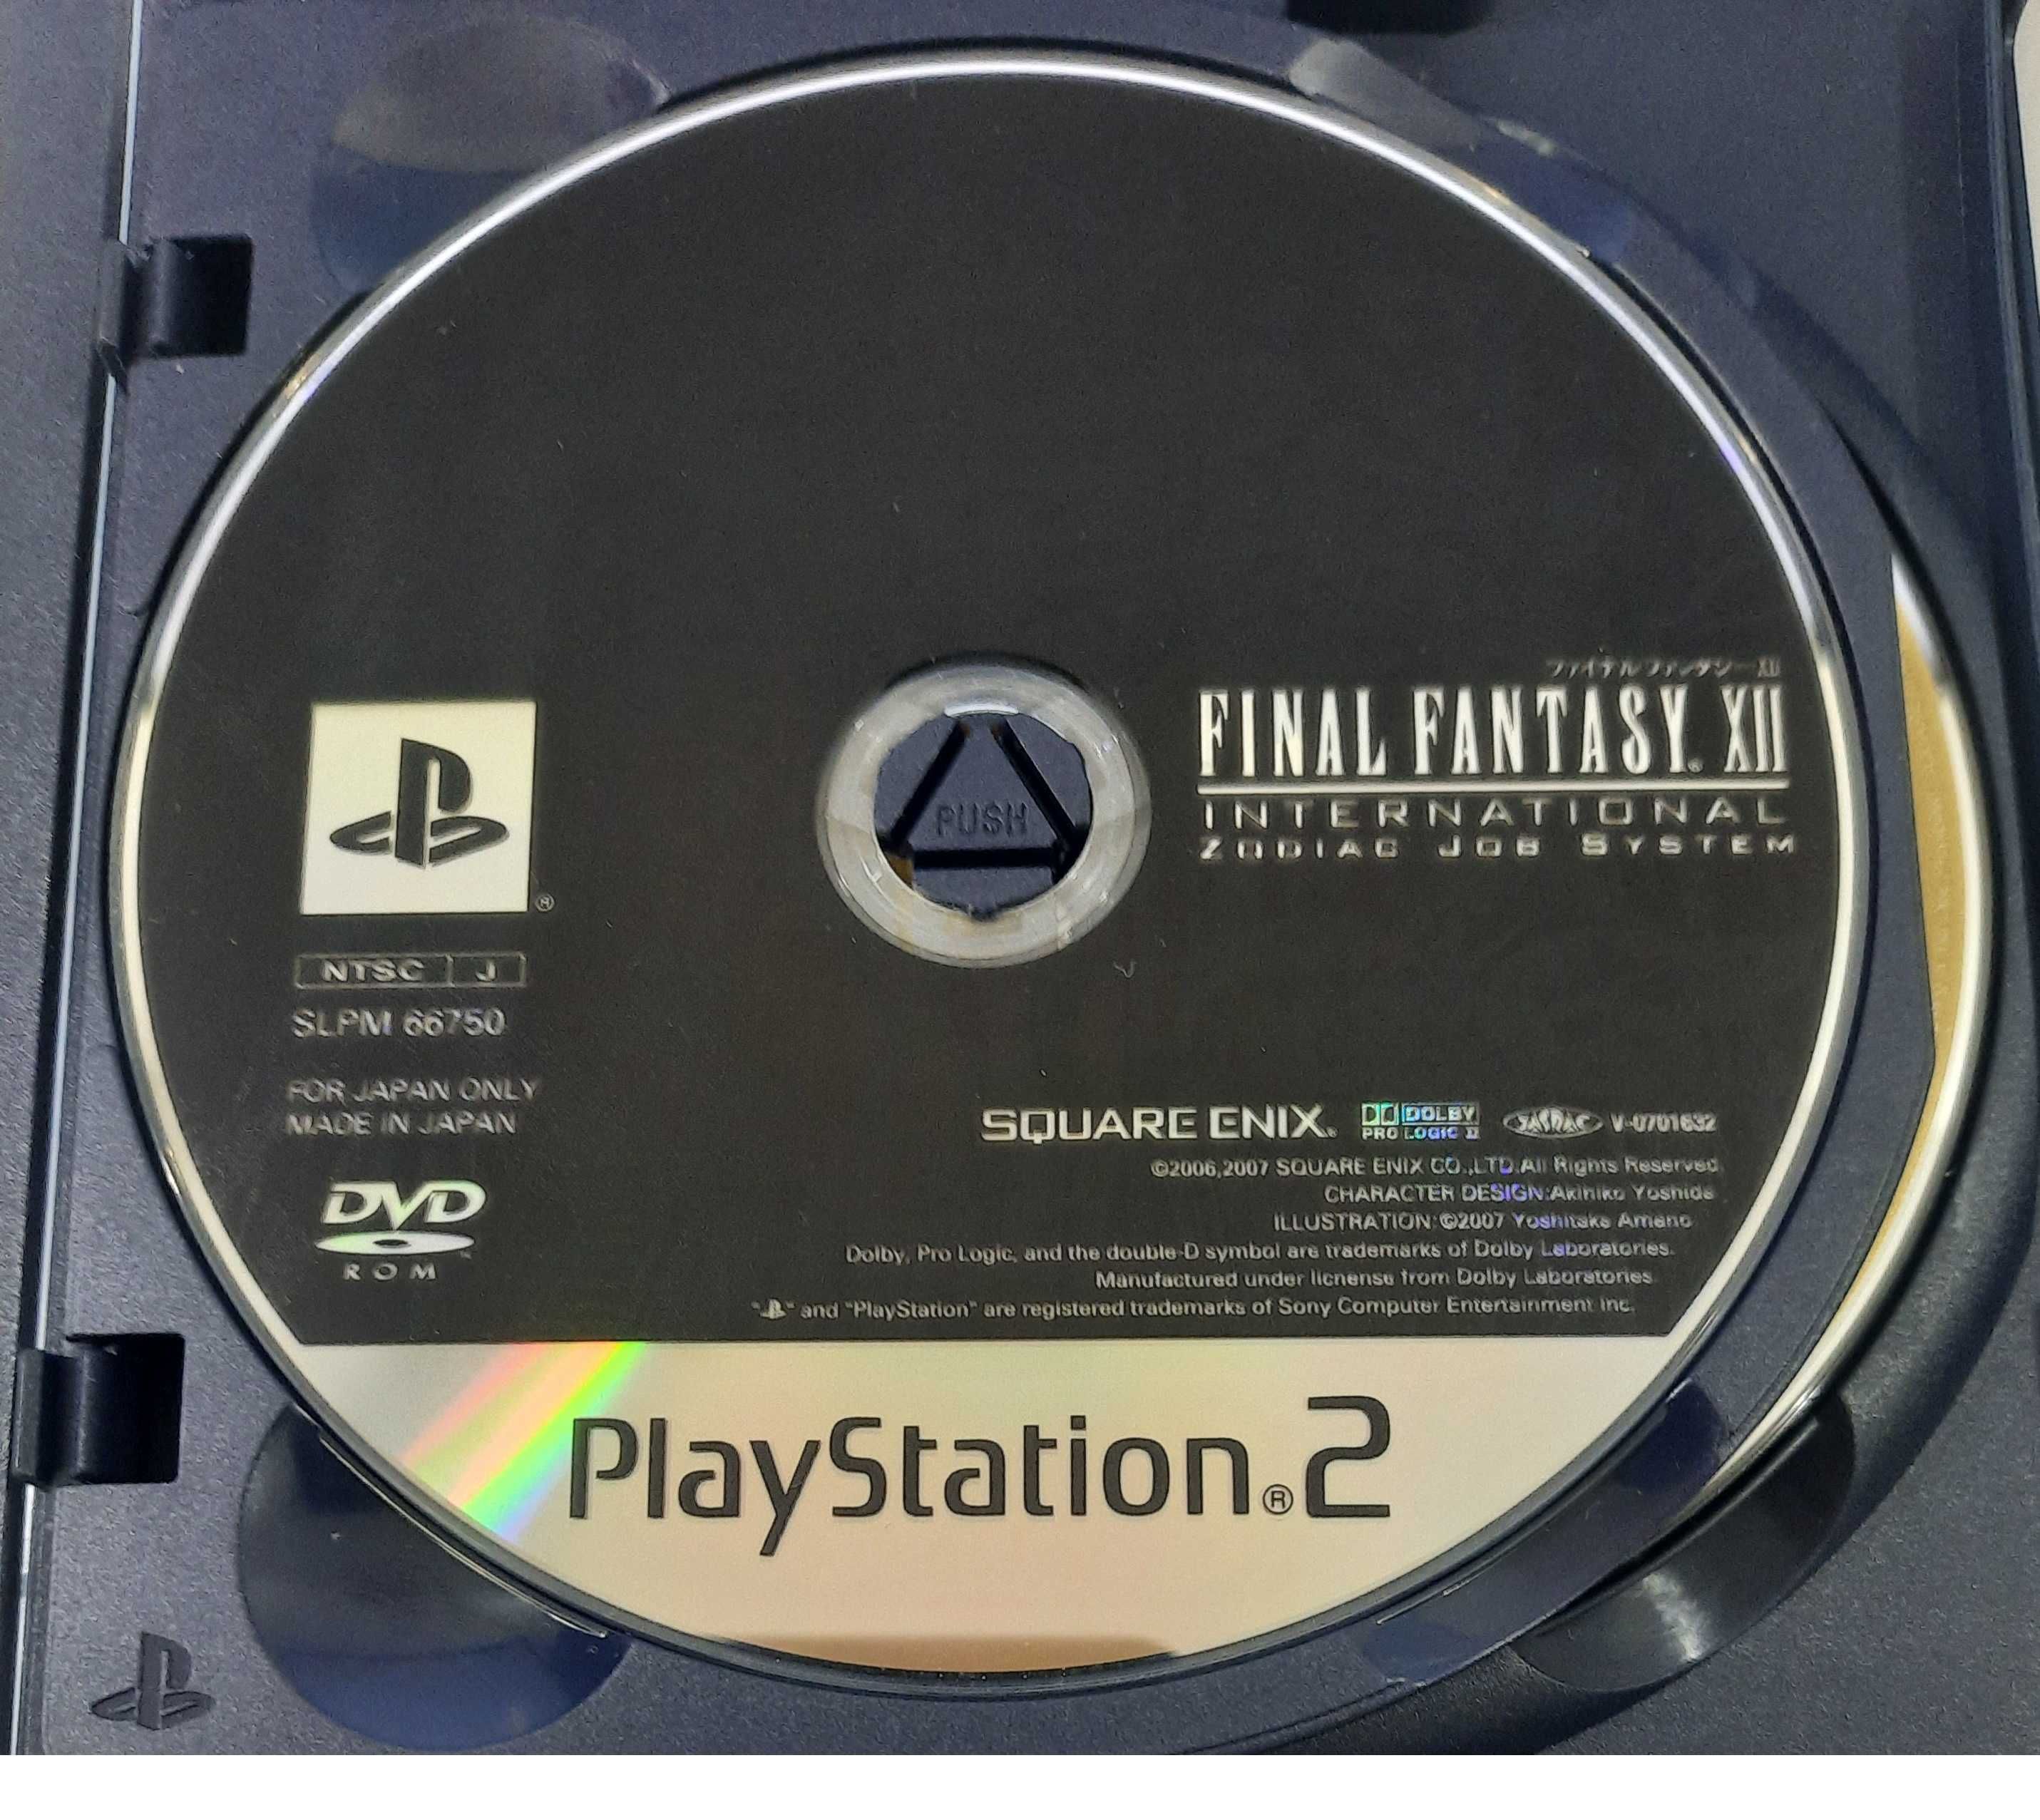 Final Fantasy XII International - Zodiac Job System / PS2 [NTSC-J]